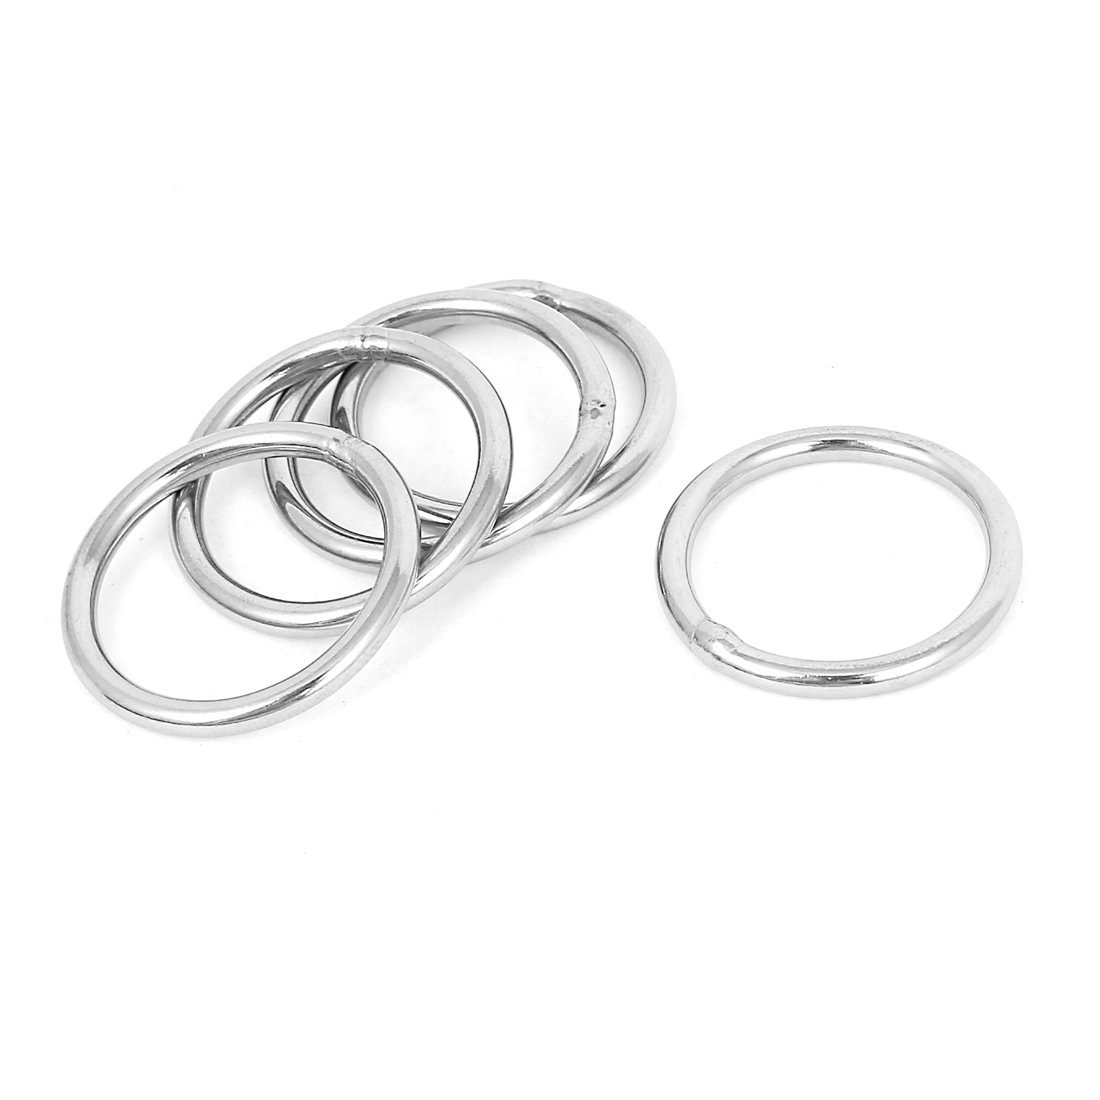 Кольцо нержавейка сварное 60мм. Кольцо нержавейка 0,75* 4мм. Аспирационное кольцо 200 мм нержавеющая сталь. Кольцо нержавеющая сталь 30мм.